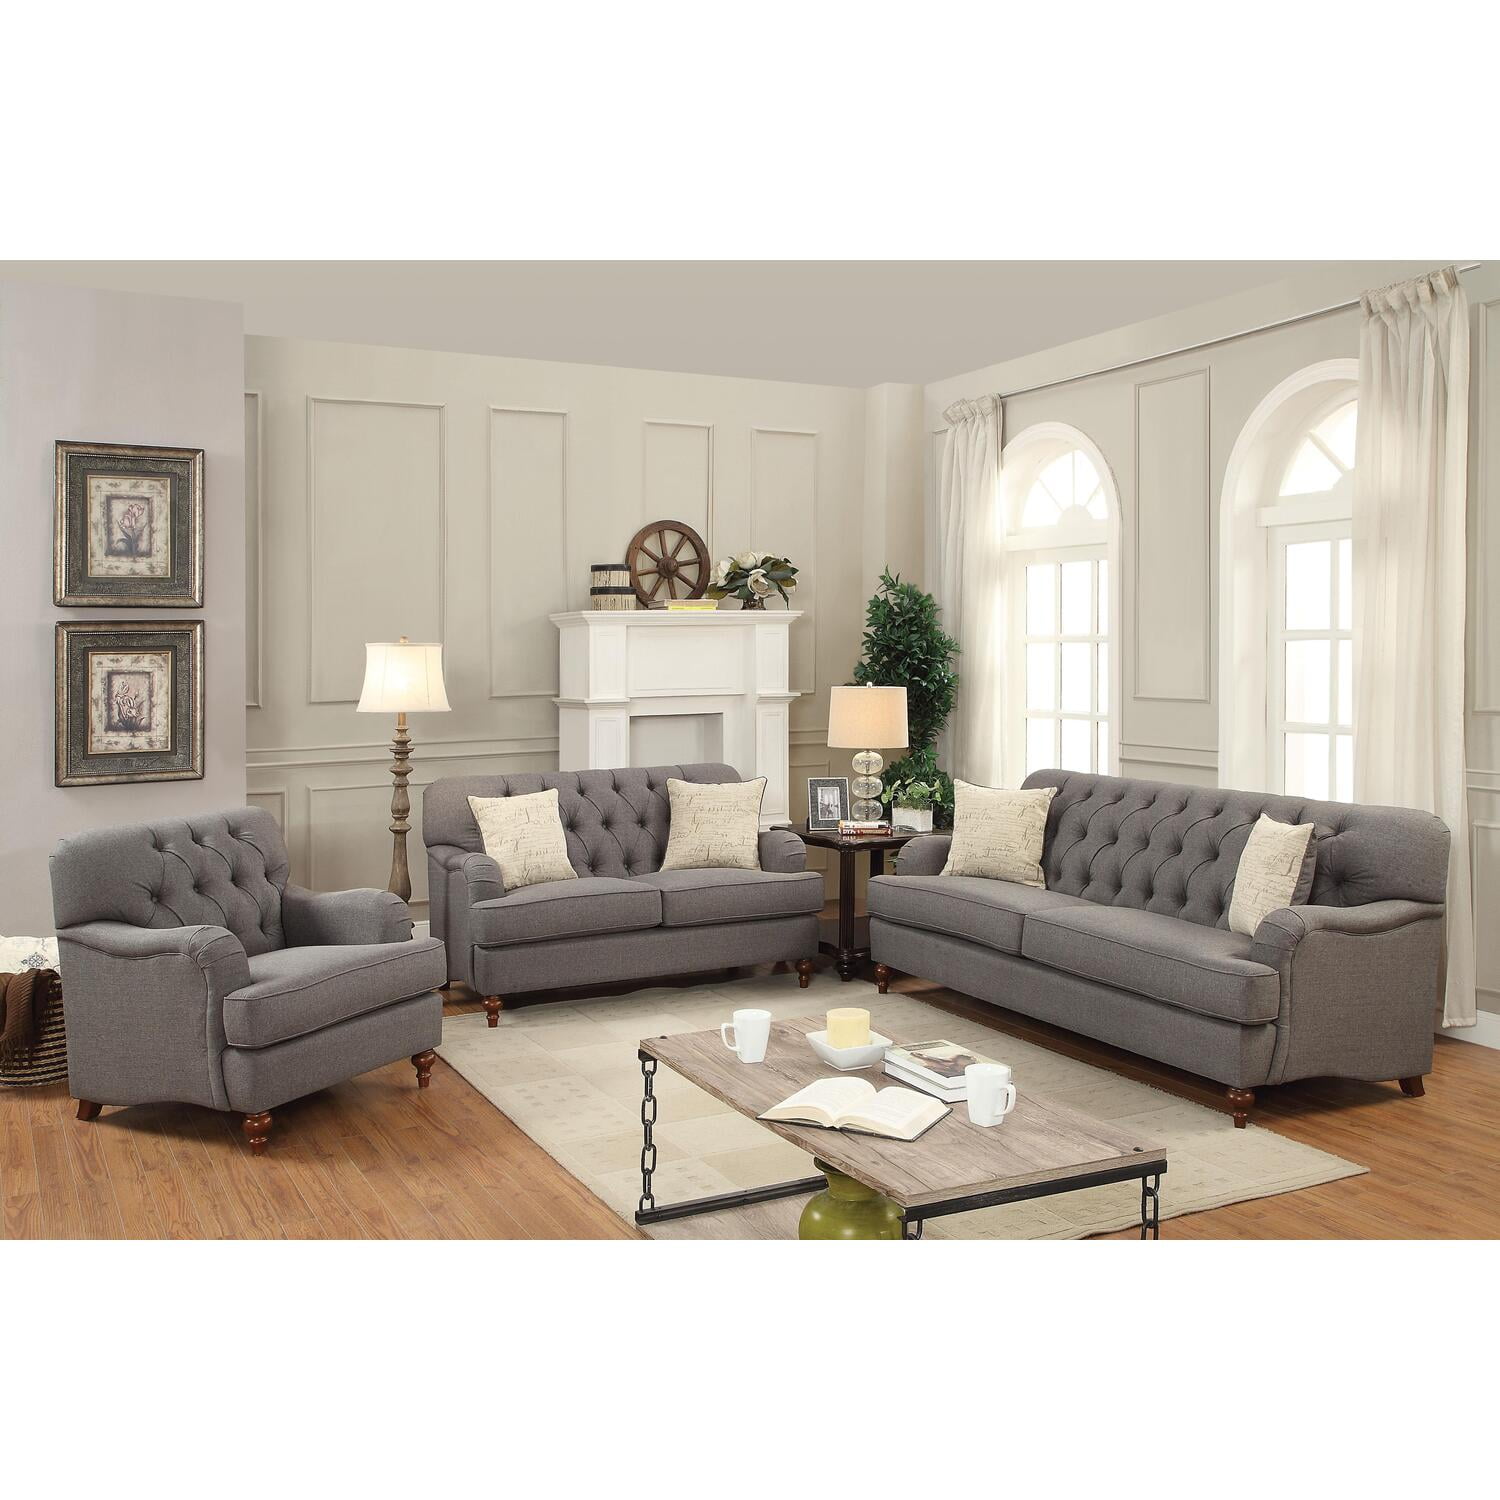 Picture of ACME 53690 Alianza Sofa with 2 Pillows - Dark Gray Fabric - 37 x 85 x 38 in.